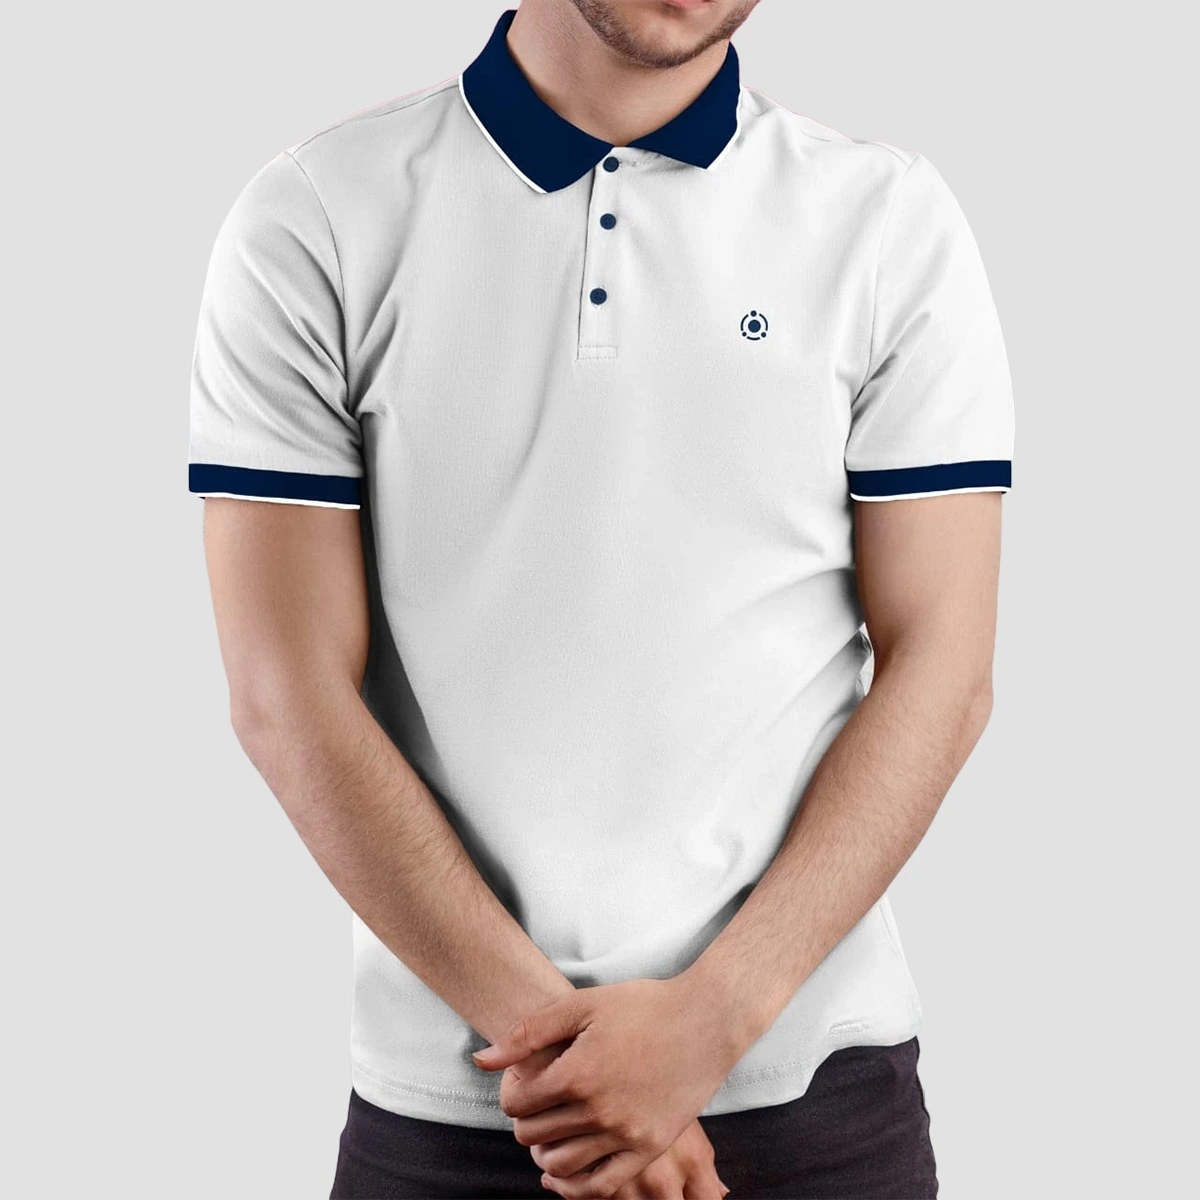 Cotton Polo Shirt For Men’s desi shopping desishopping